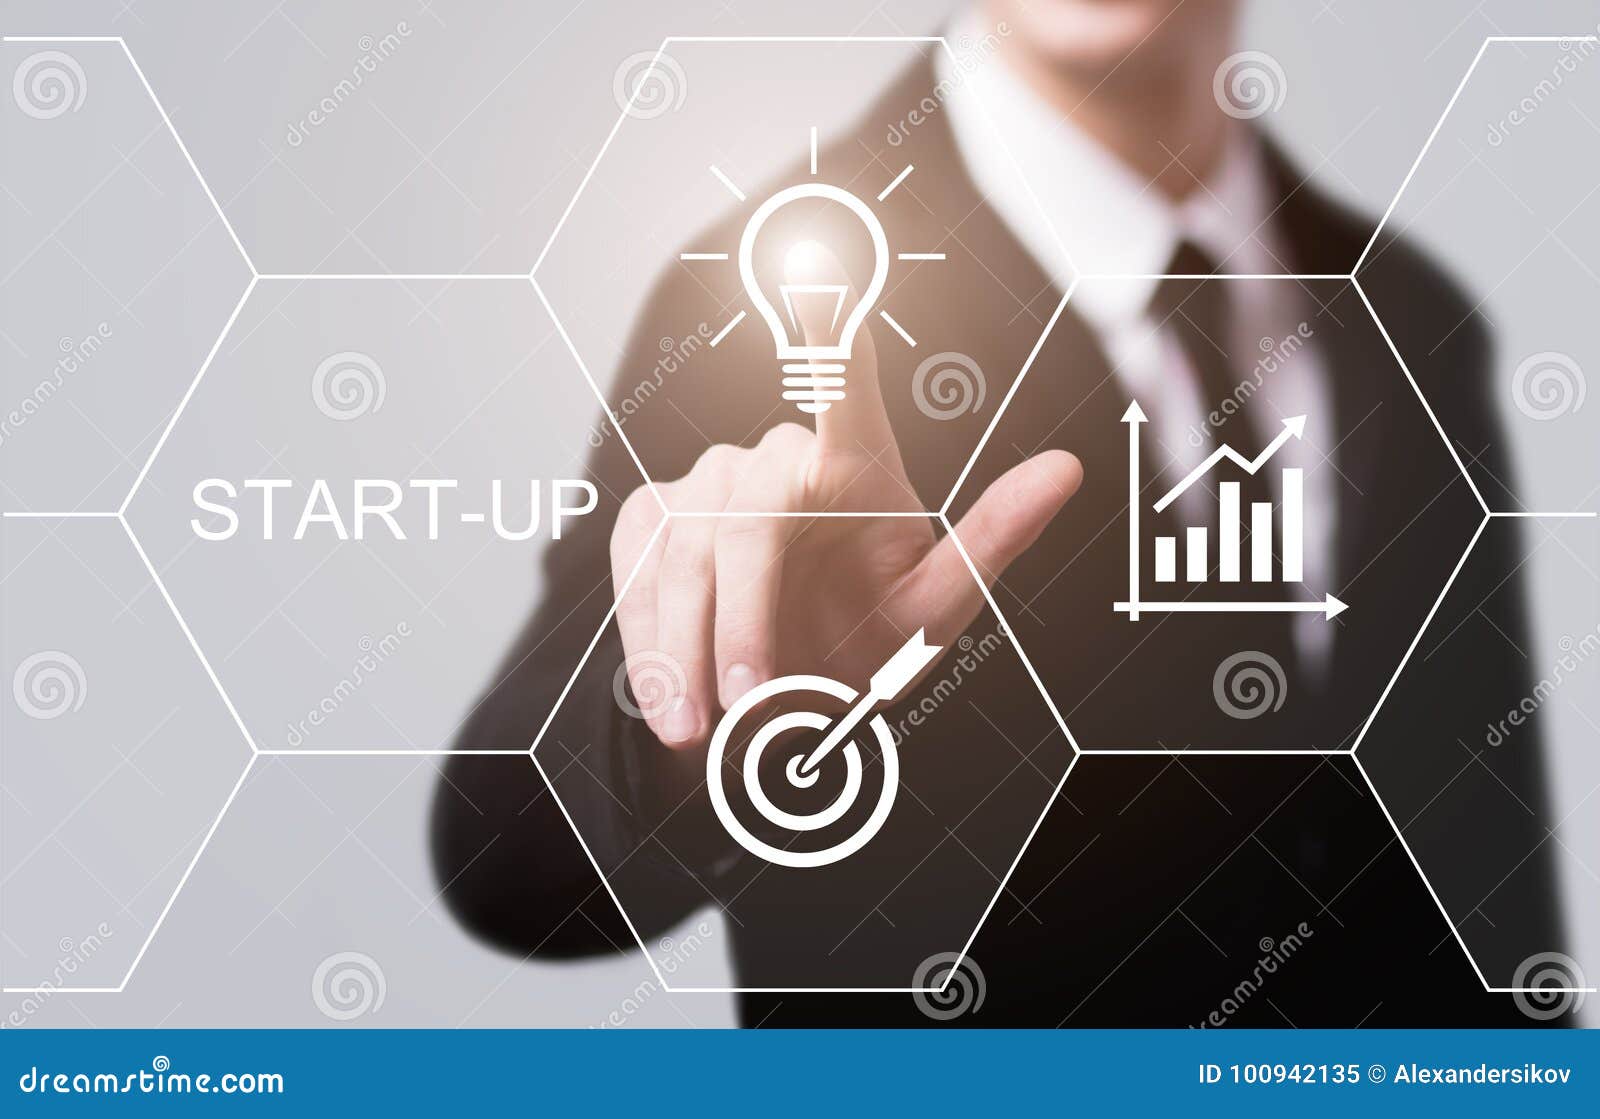 start-up funding crowdfunding investment venture capital entrepreneurship internet business technology concept